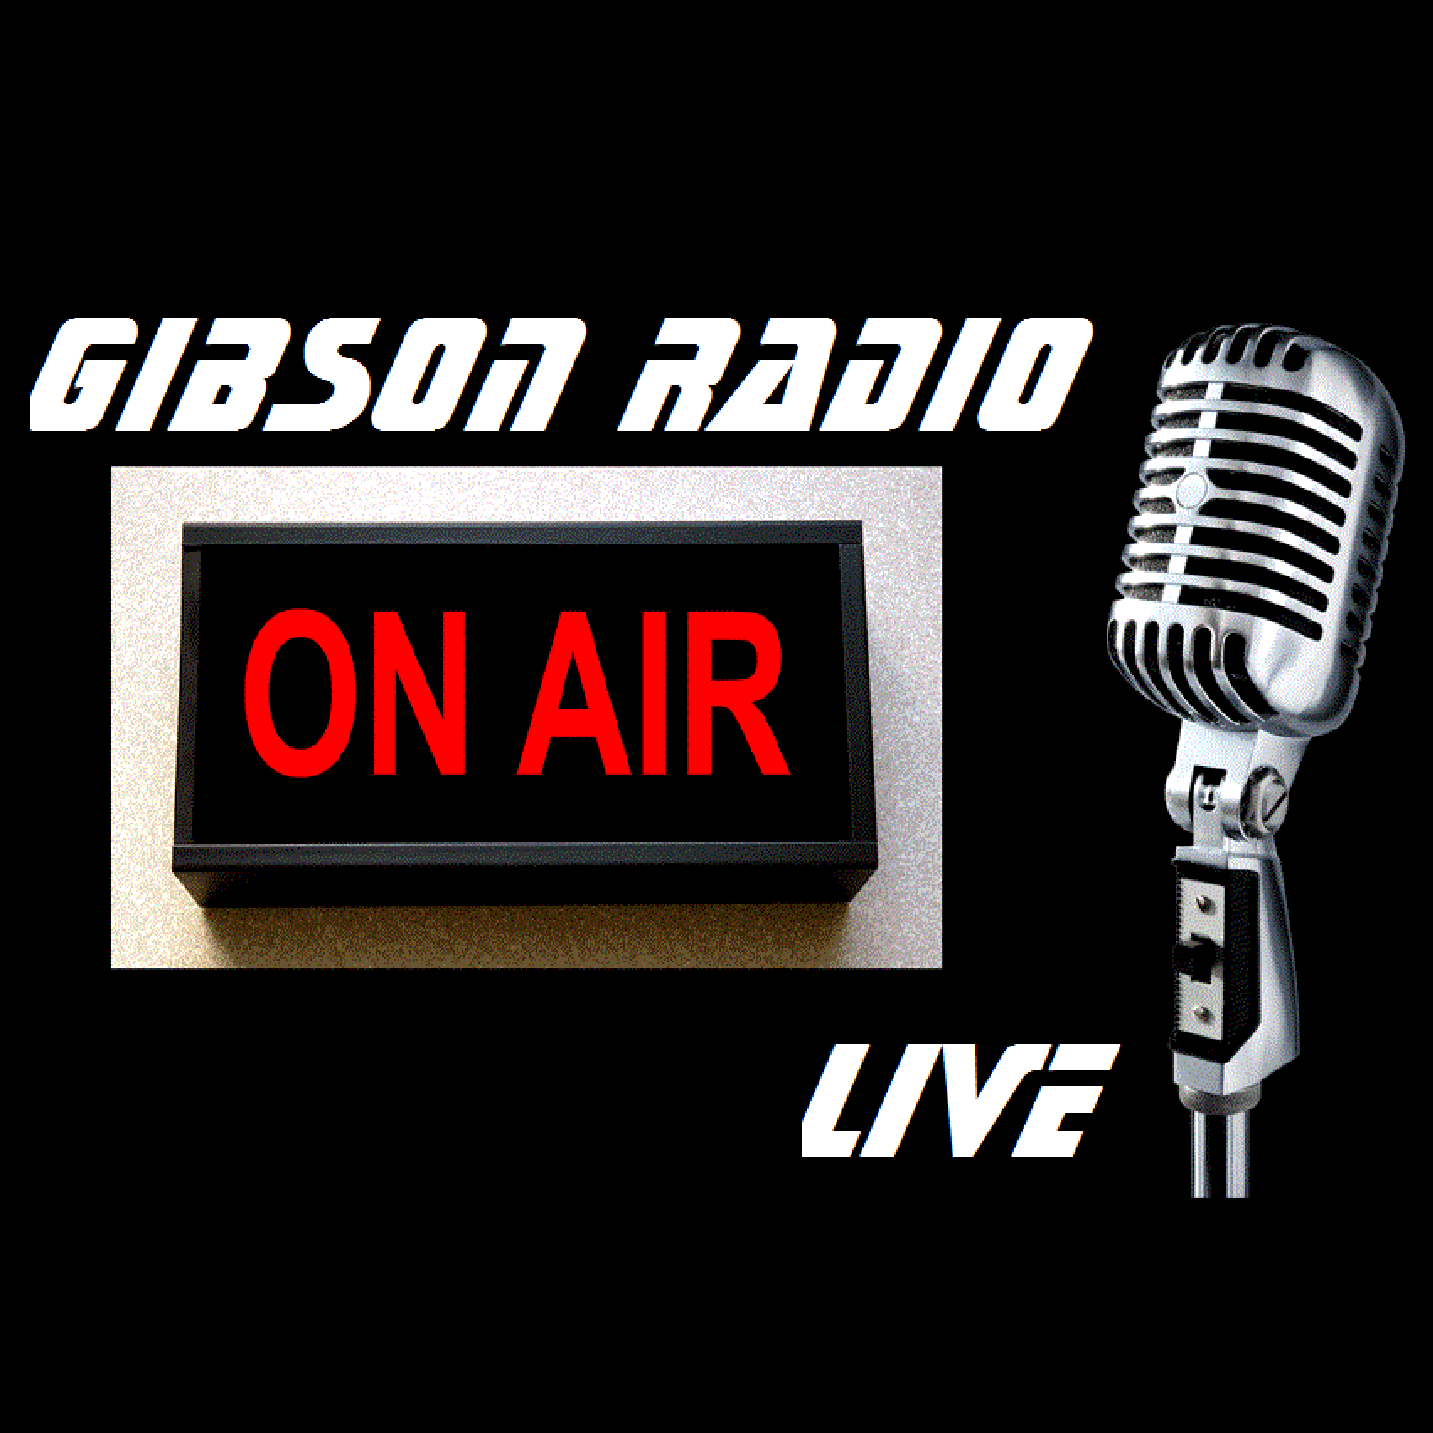 Gibson Radio Live